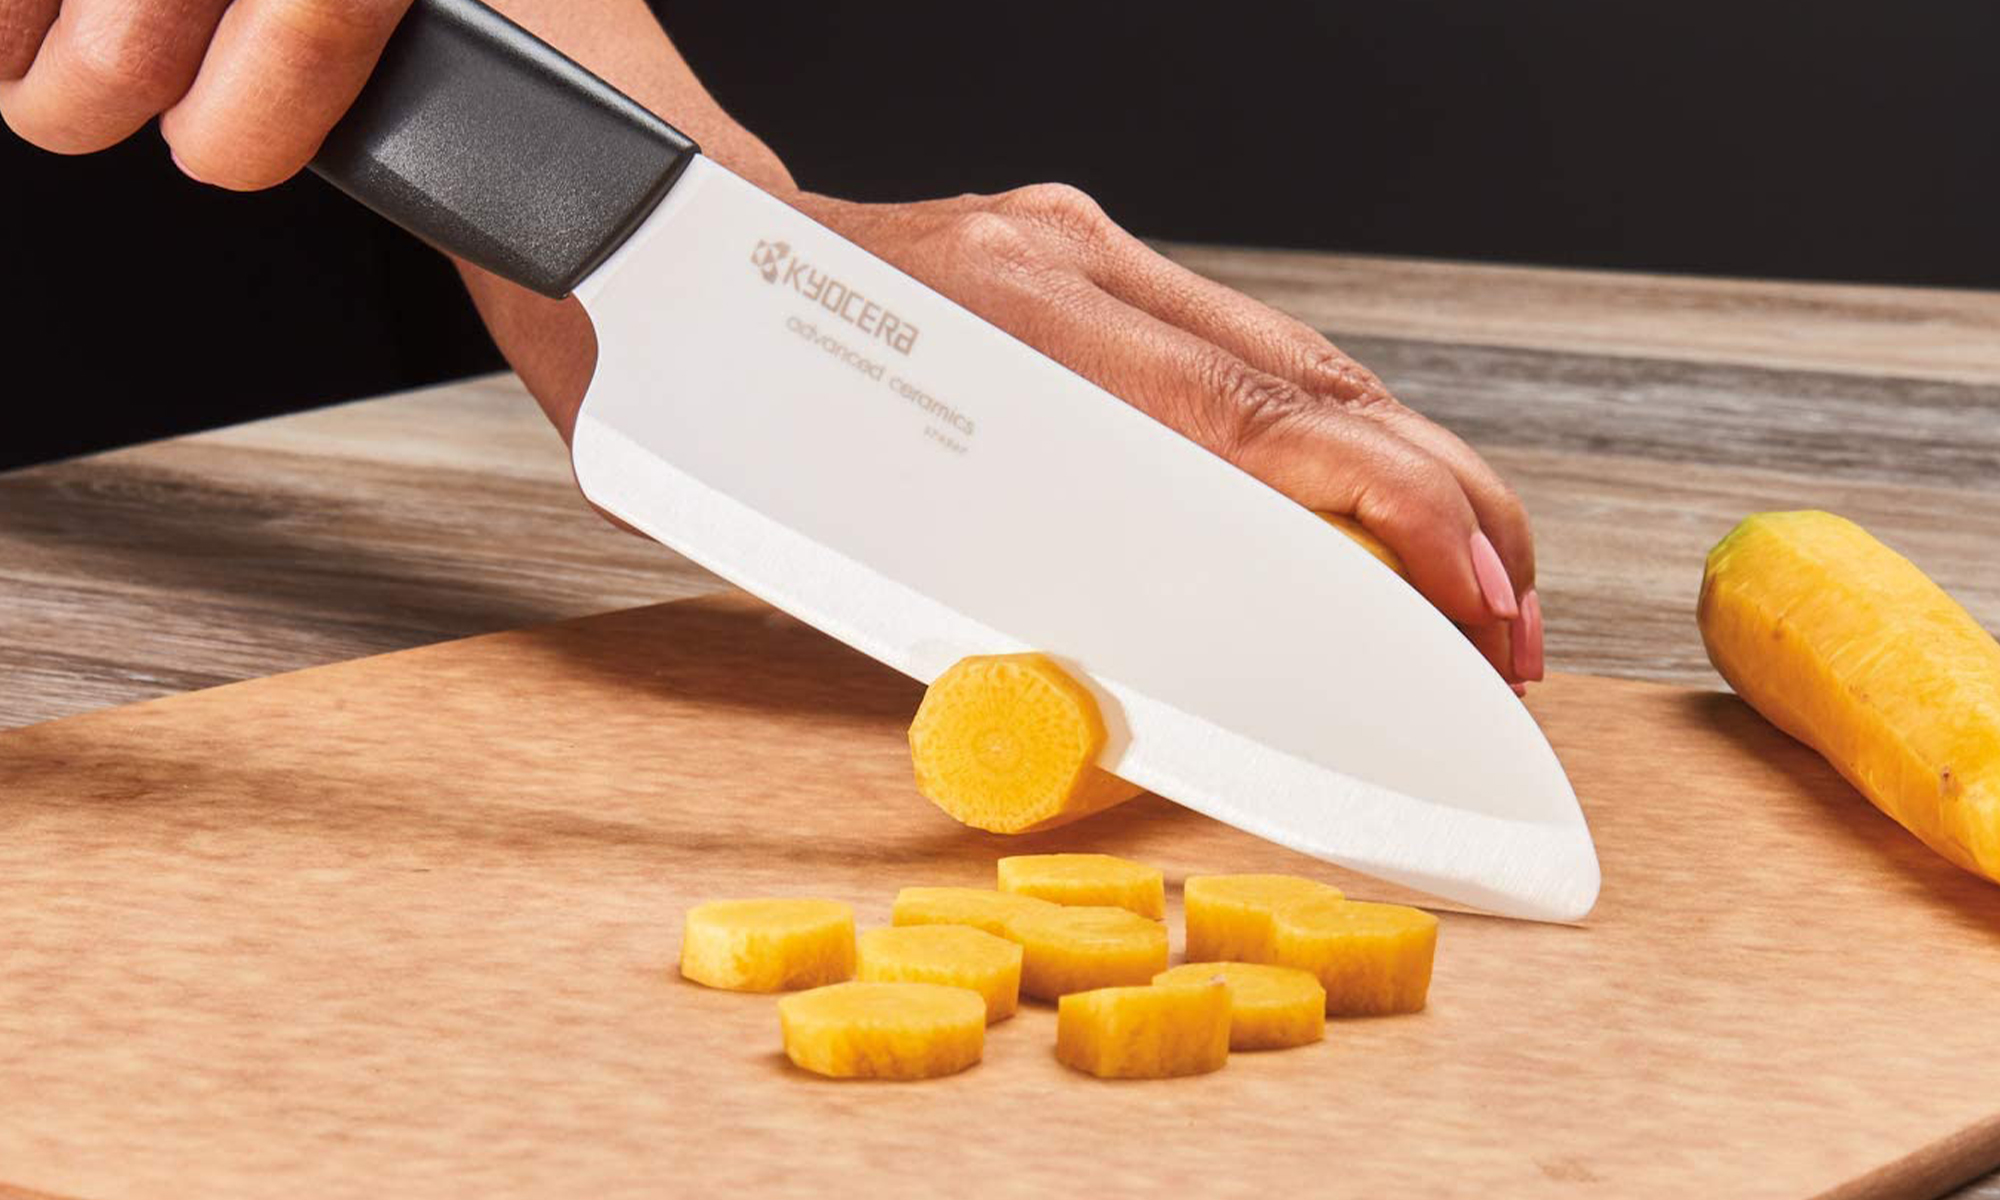 Kyocera Ceramic kitchen knife" data-uuid="ee79c577-46cf-3bb3-8934-f7036a3c8846